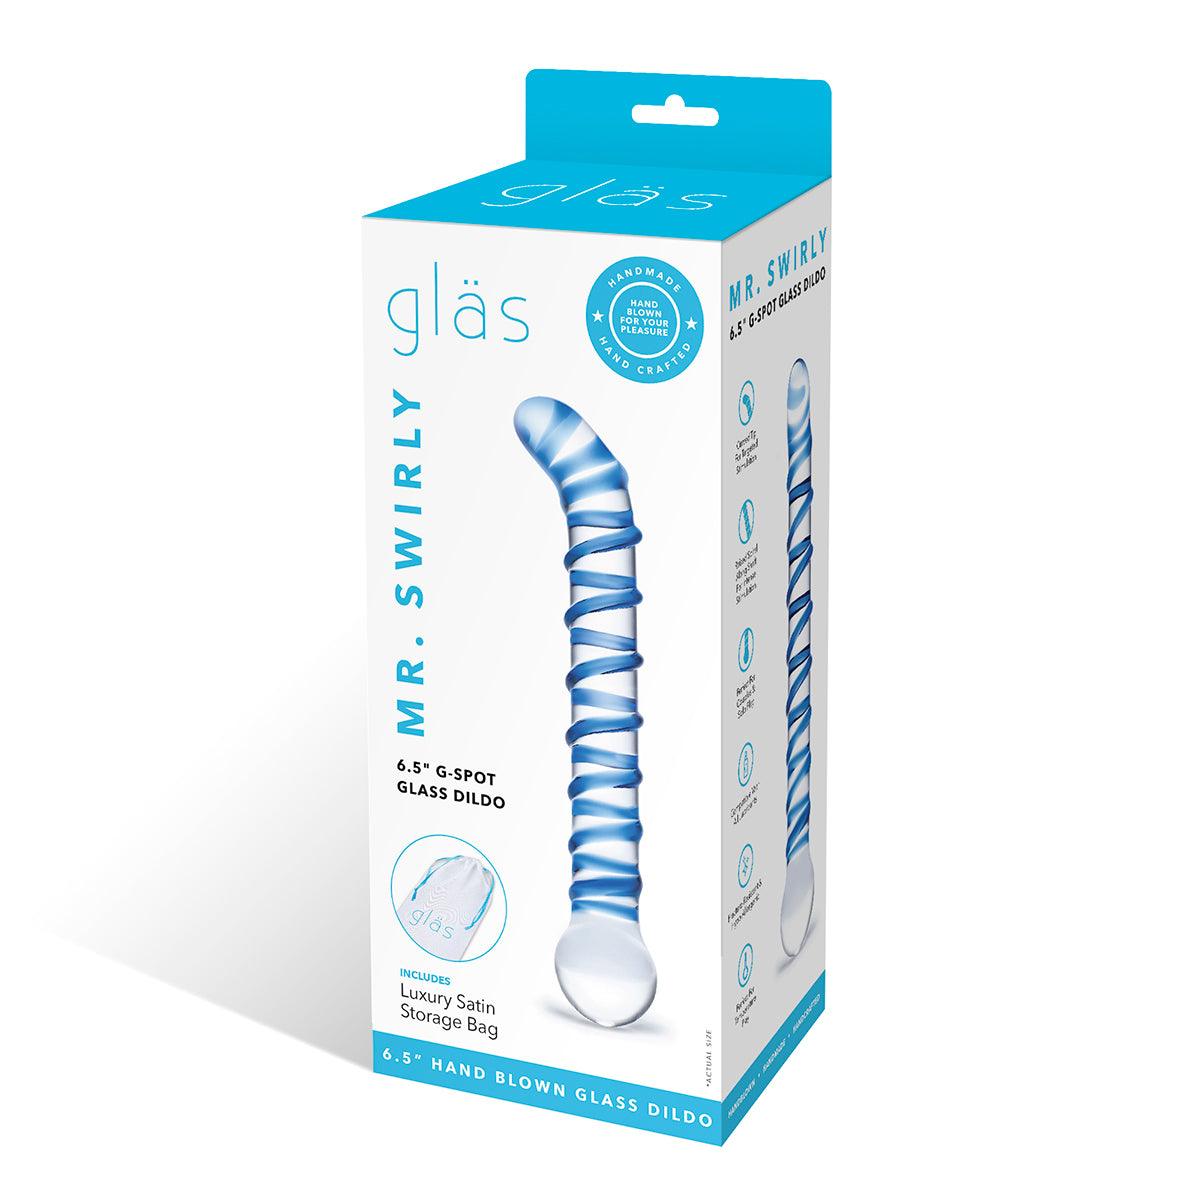 GLAS Mx. Swirly G-Spot Glass Dil 6.5" - shop enby